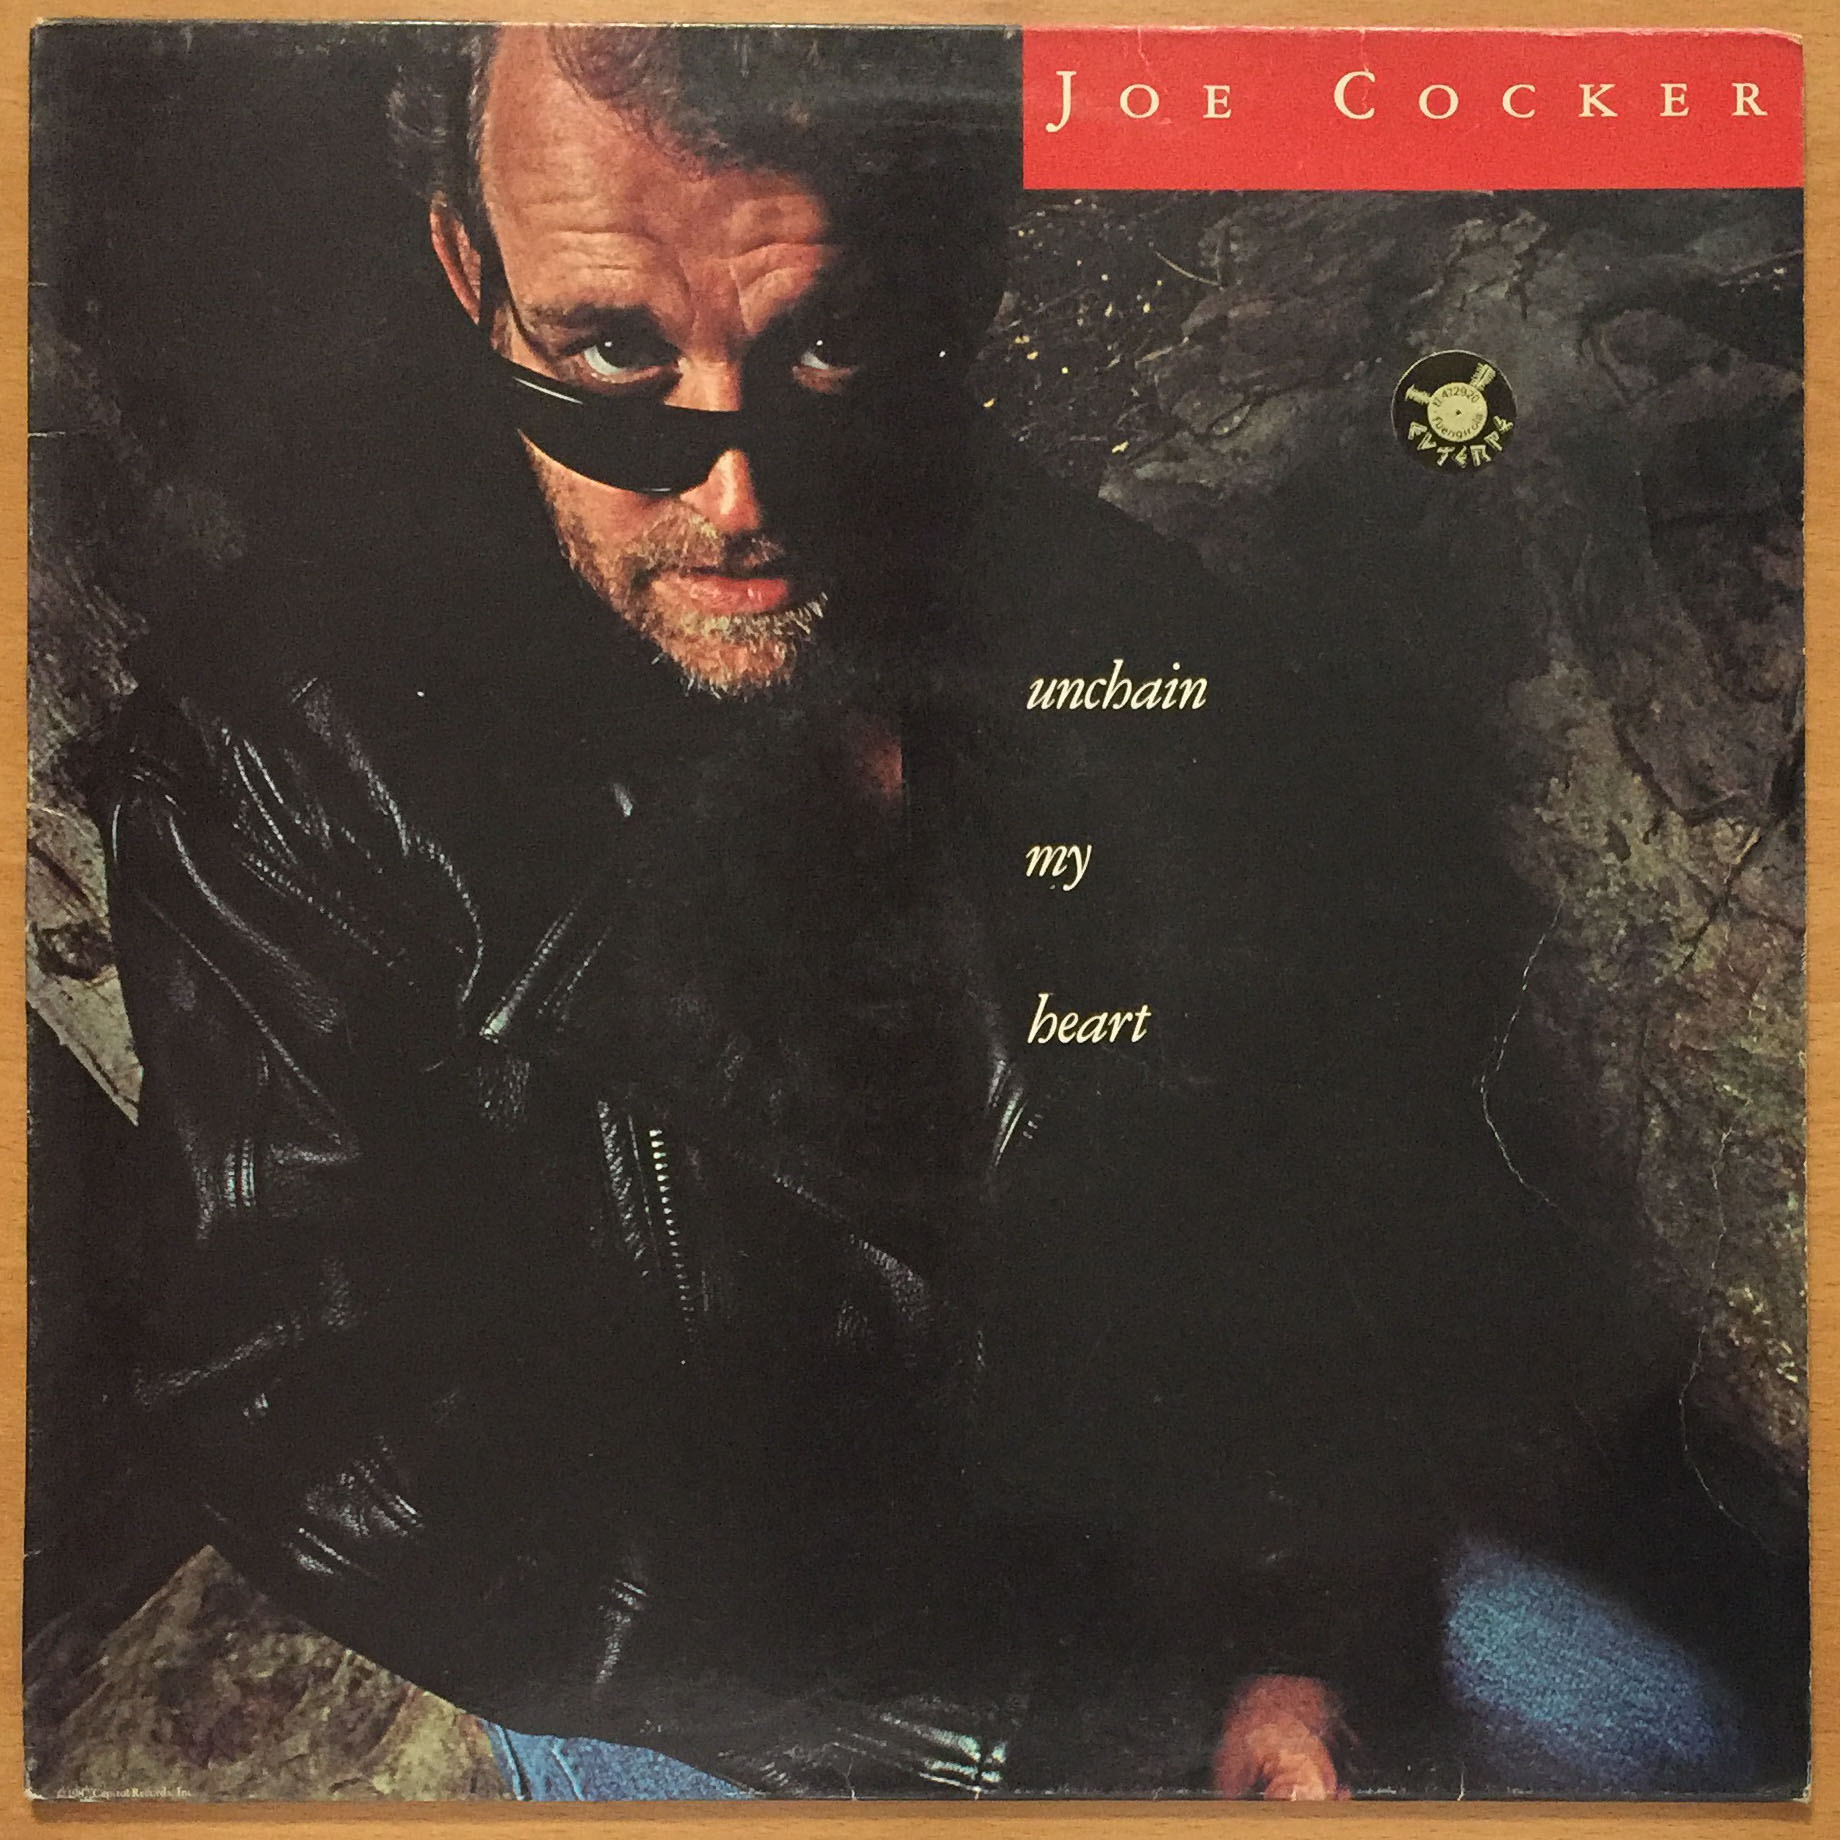 Joe Cocker-Unchain my heart. 1987 Capitol